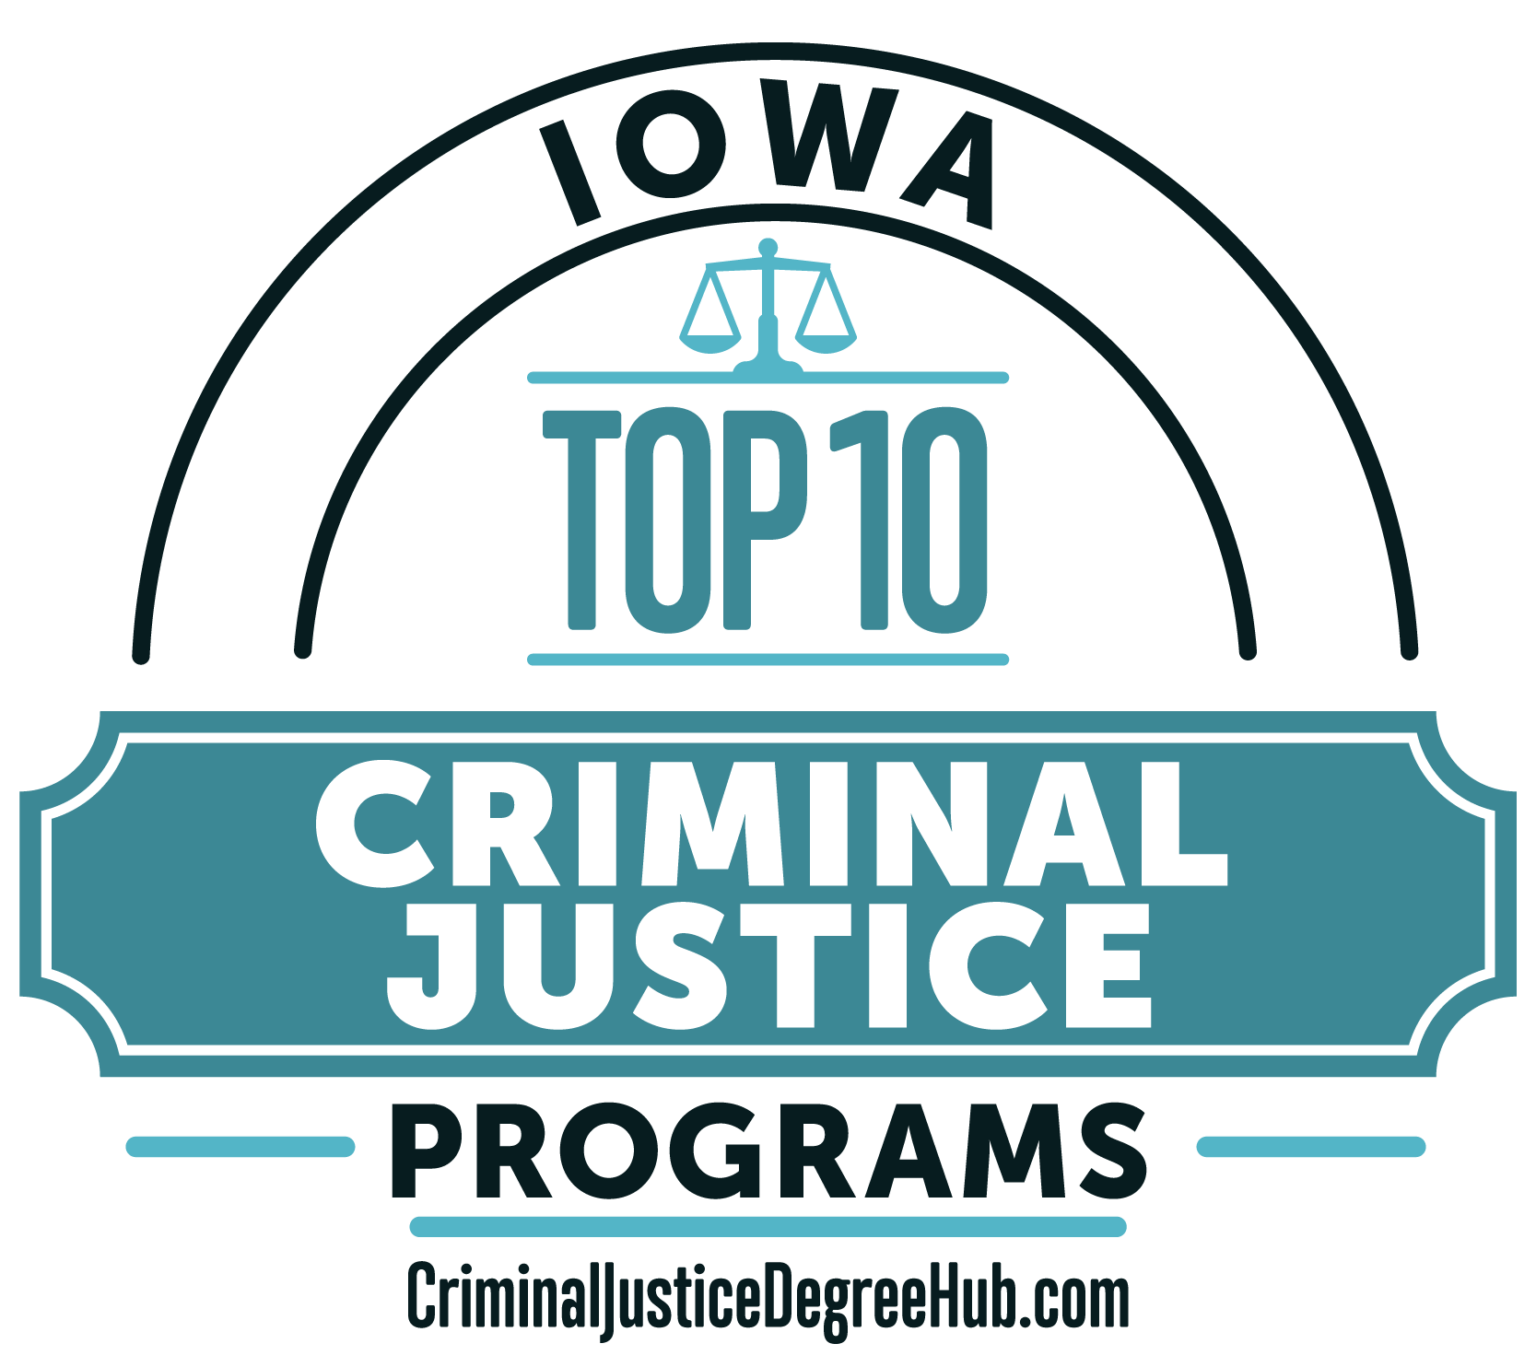 CJDH Top 10 Criminal Justice Programs Iowa 03 1536x1367 